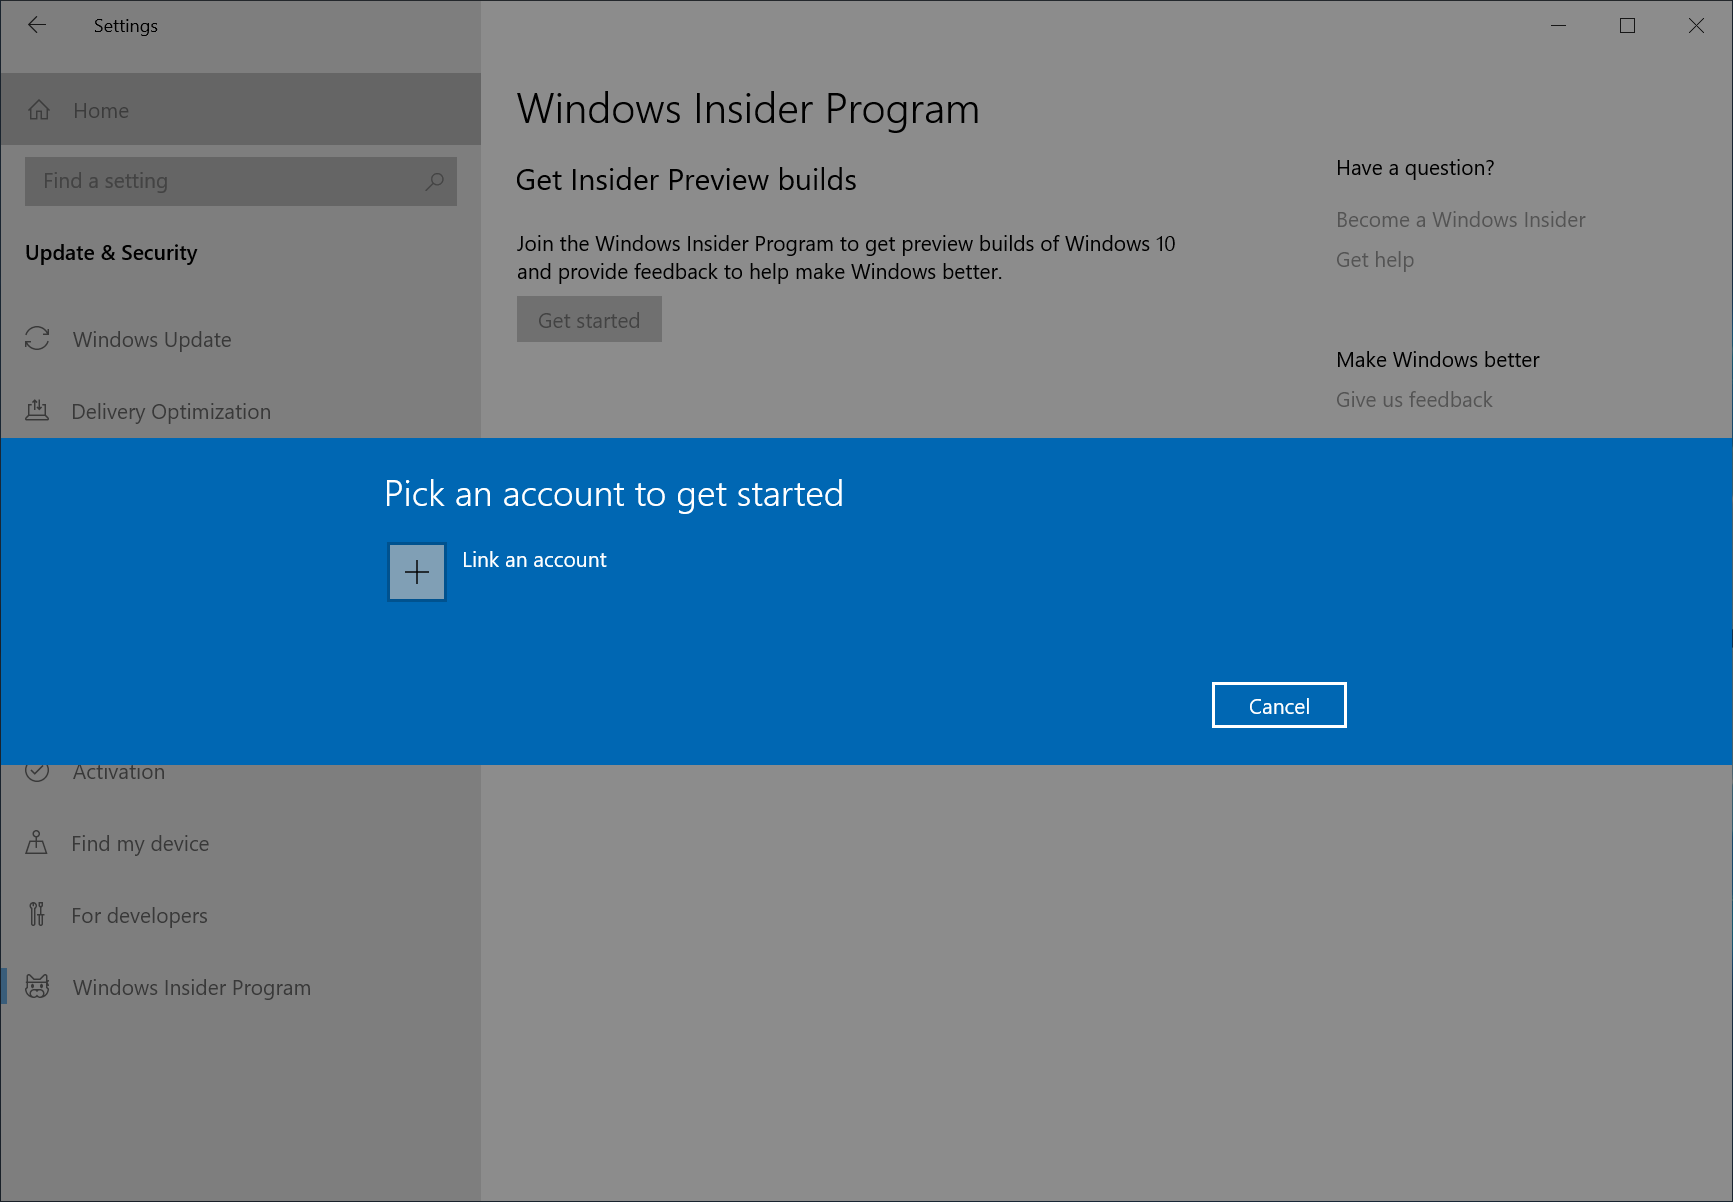 Windows 10 November 2019 Update is one step closer to release 6a7b5c495efbc557f1359d39f71f0904.png